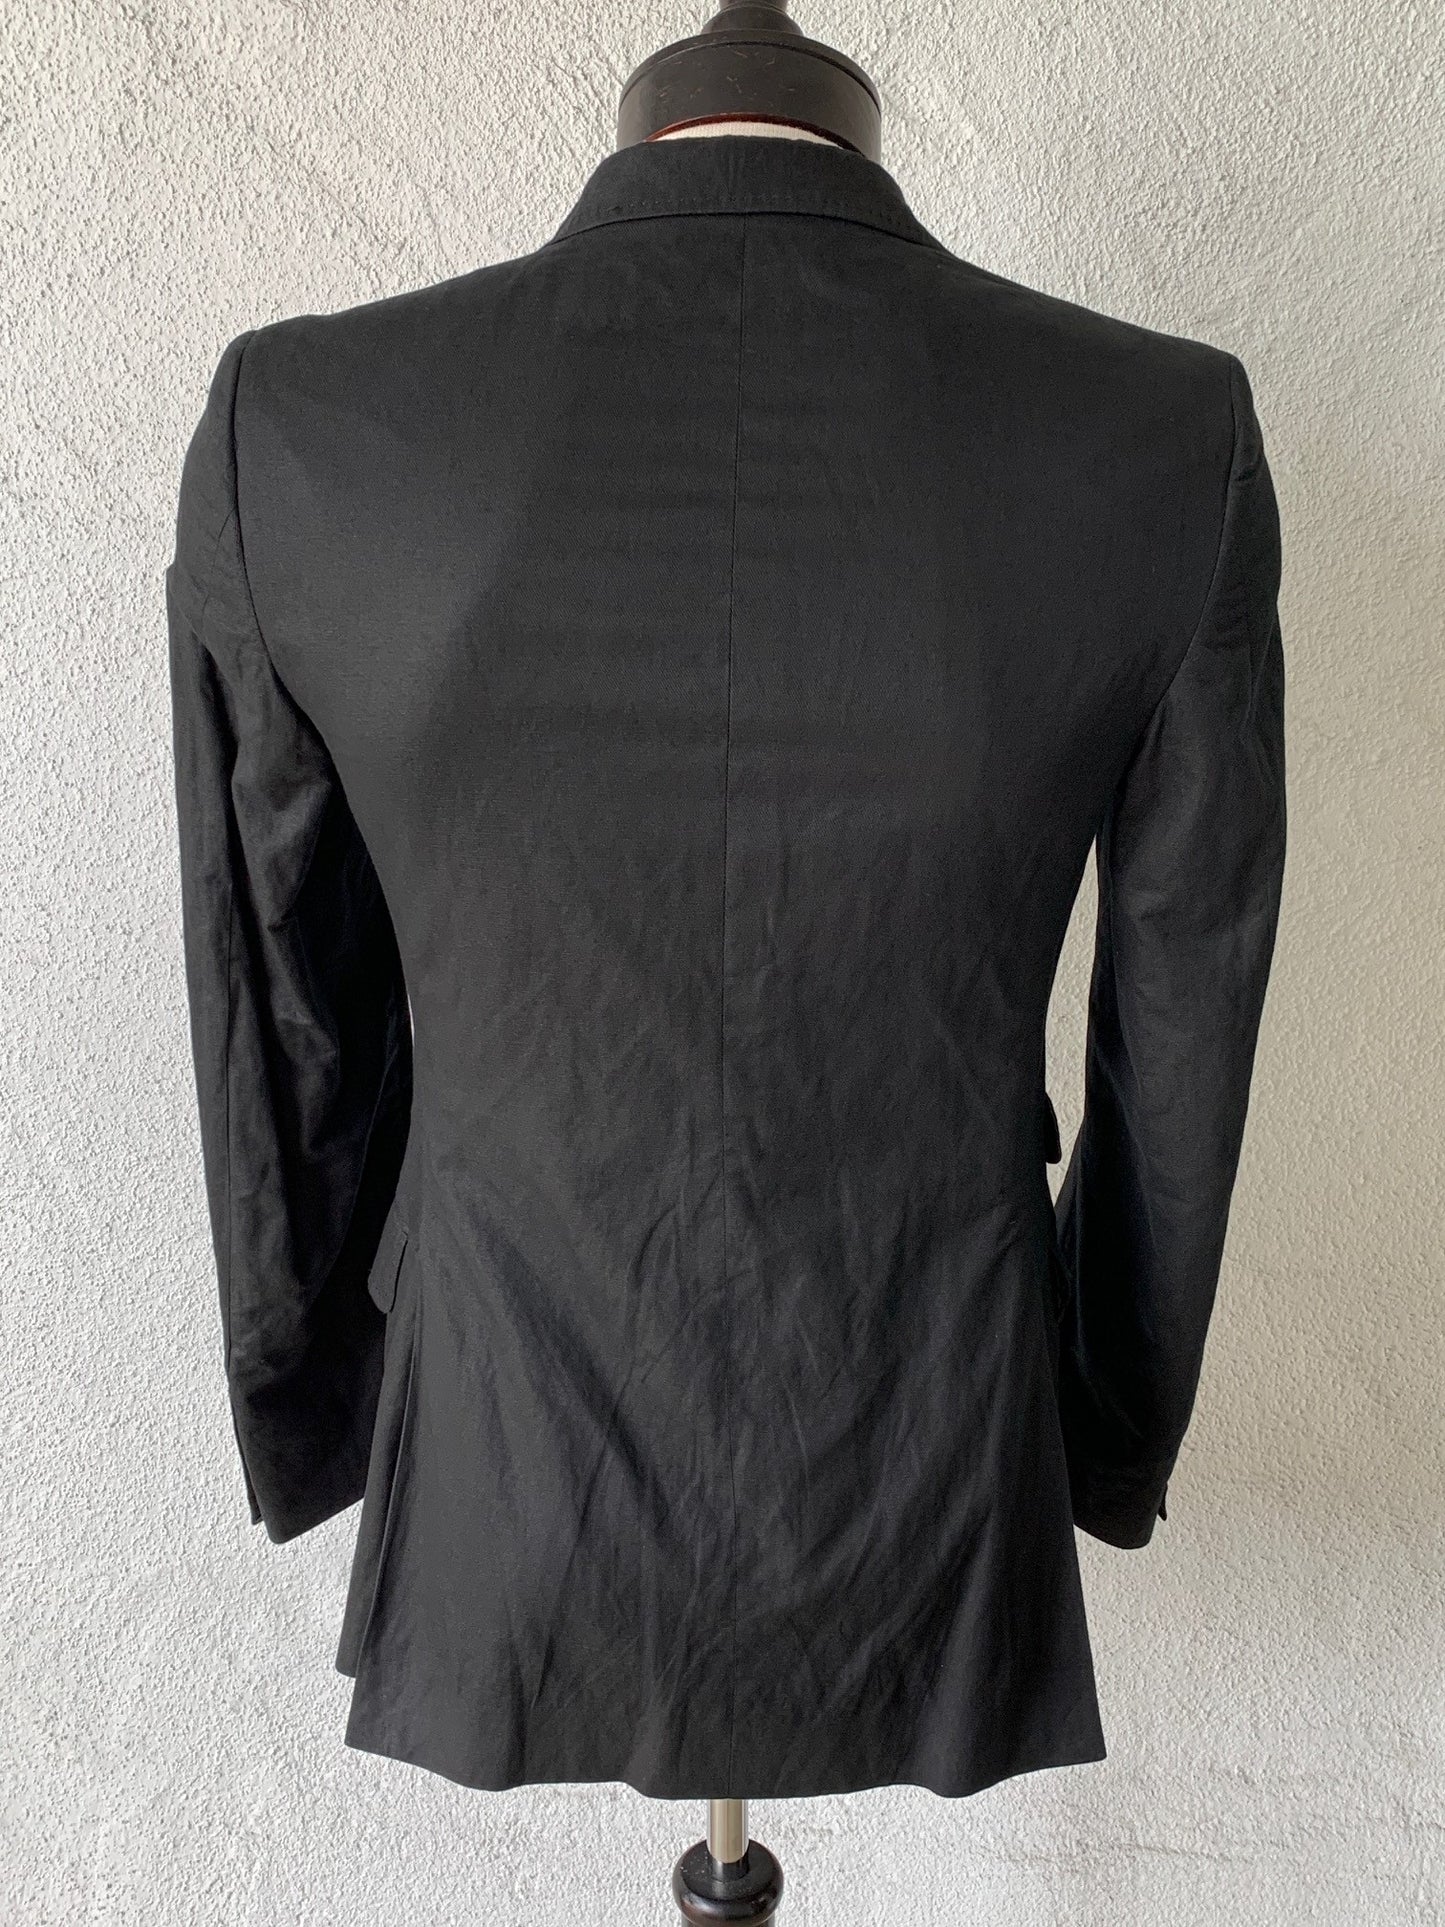 Black 3 Button Peak Lapel Black Cotton Tux Jacket by Jan & Carlos